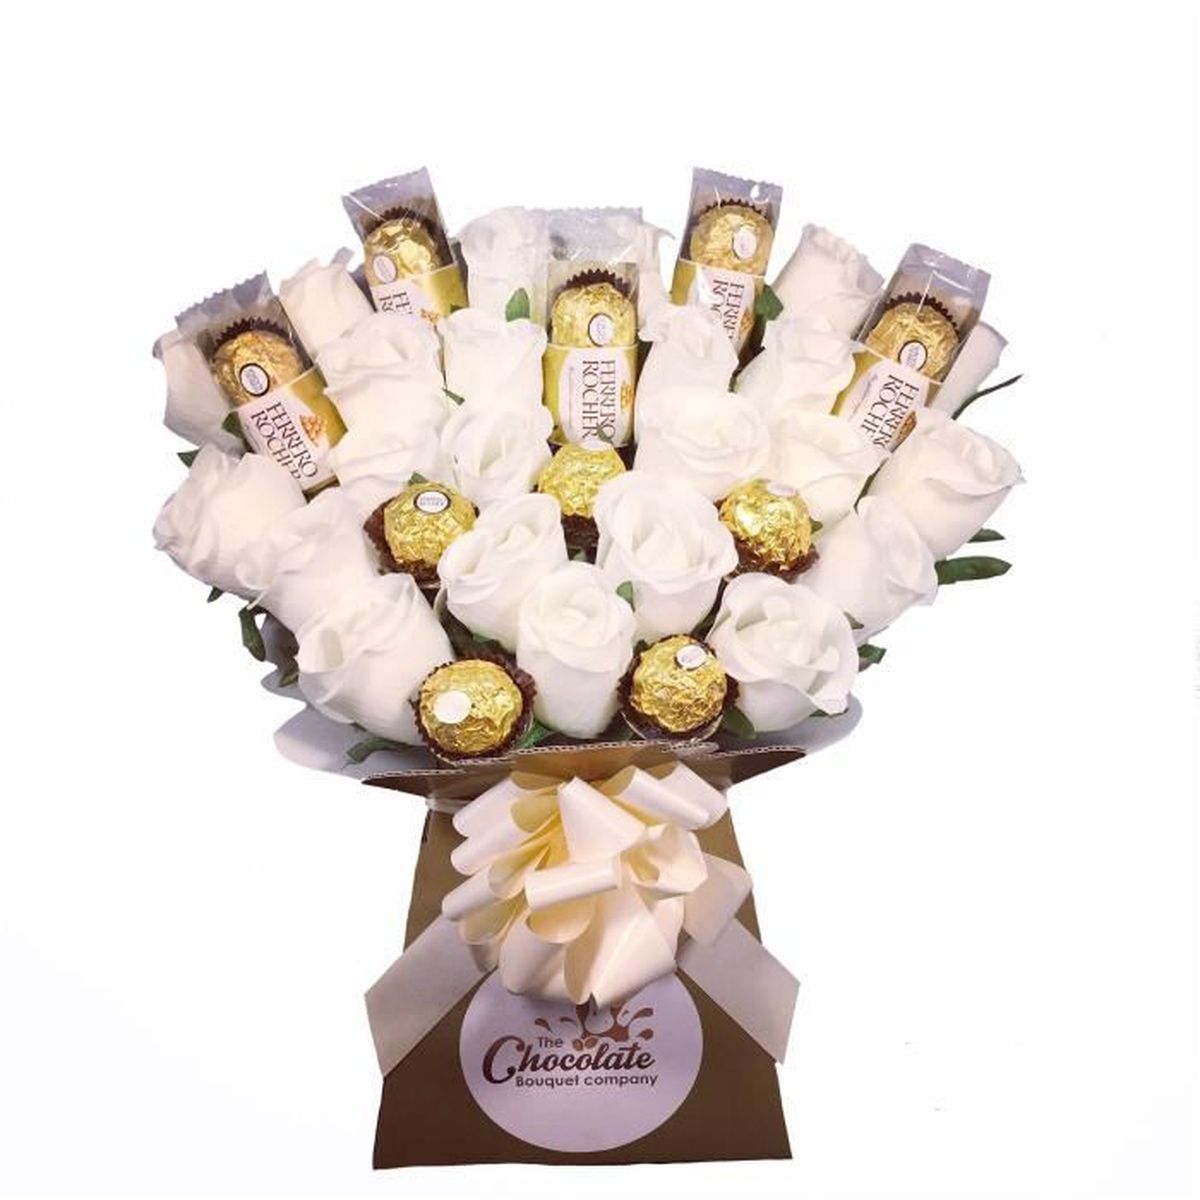 The Ferrero Rocher Chocolate Bouquet - Cdiscount Au quotidien